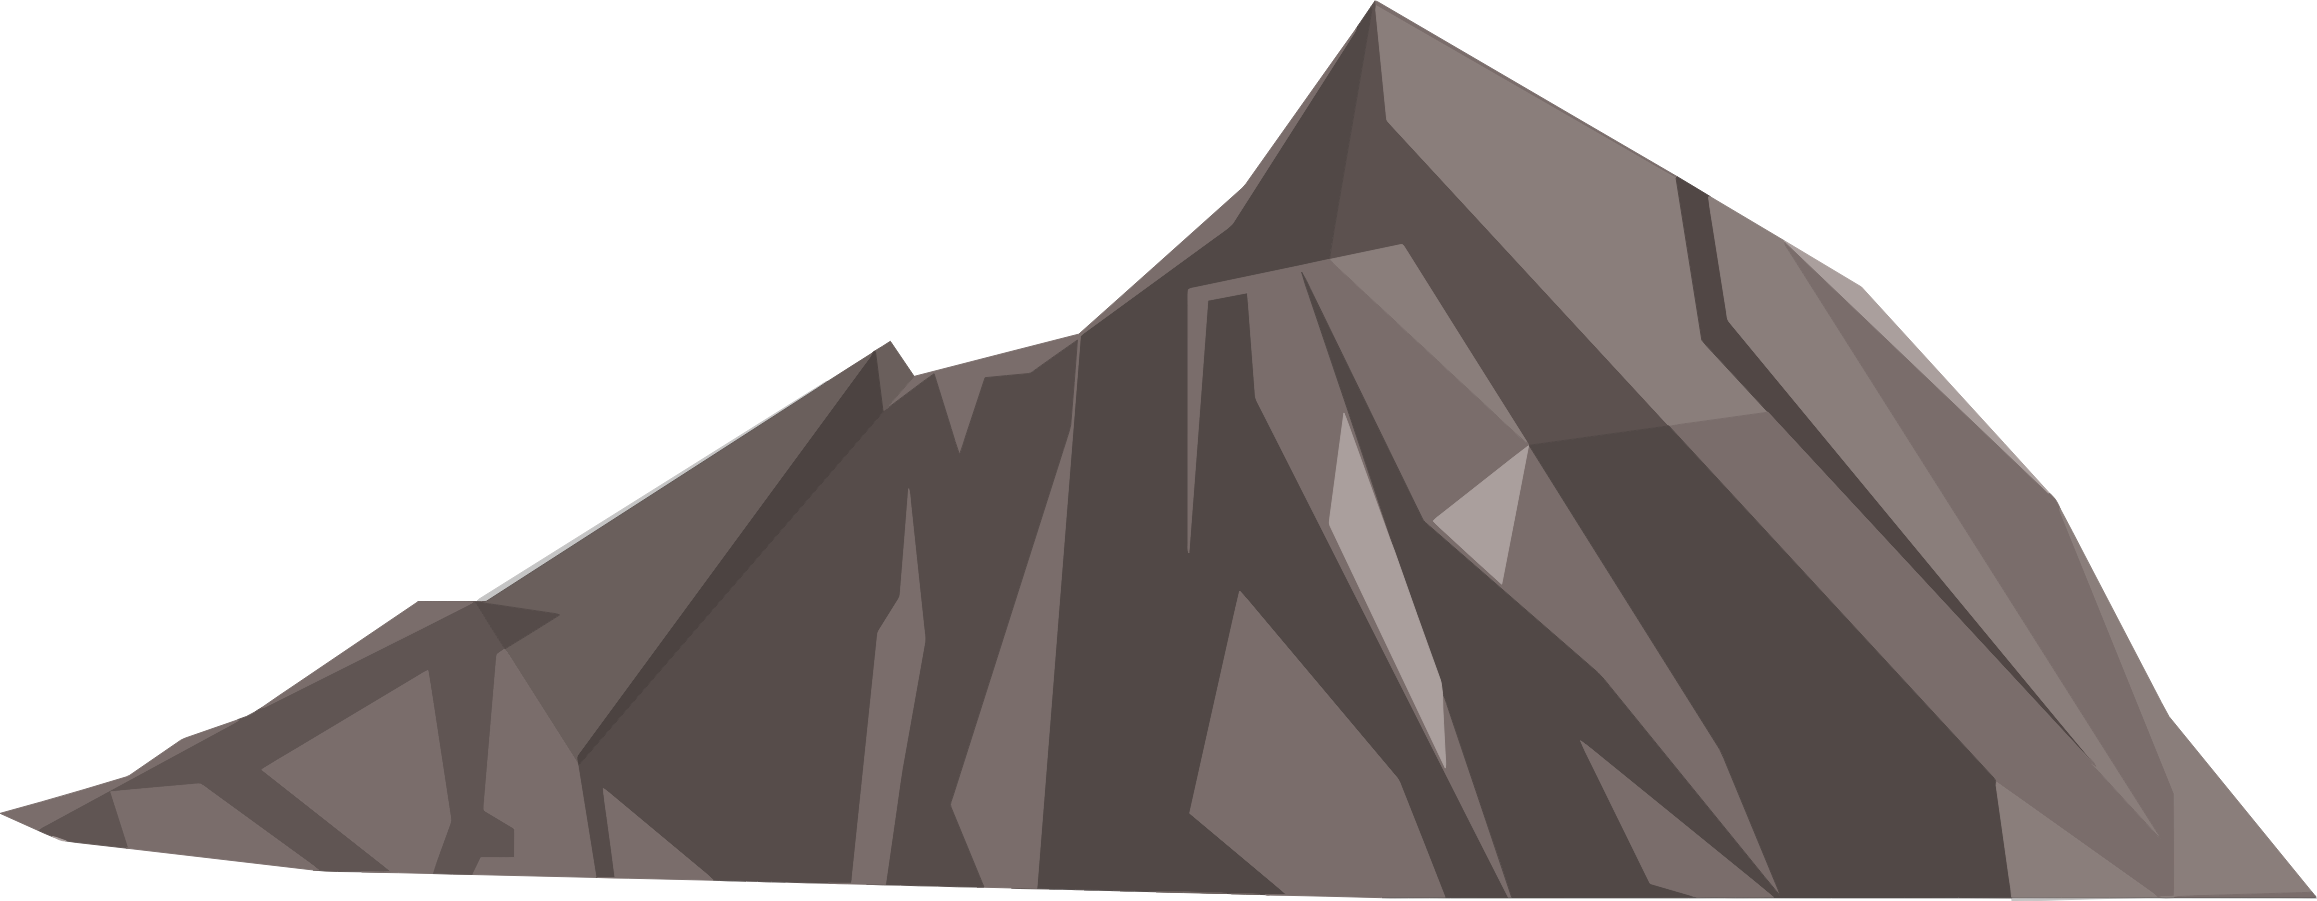 high resolution clipart mountain